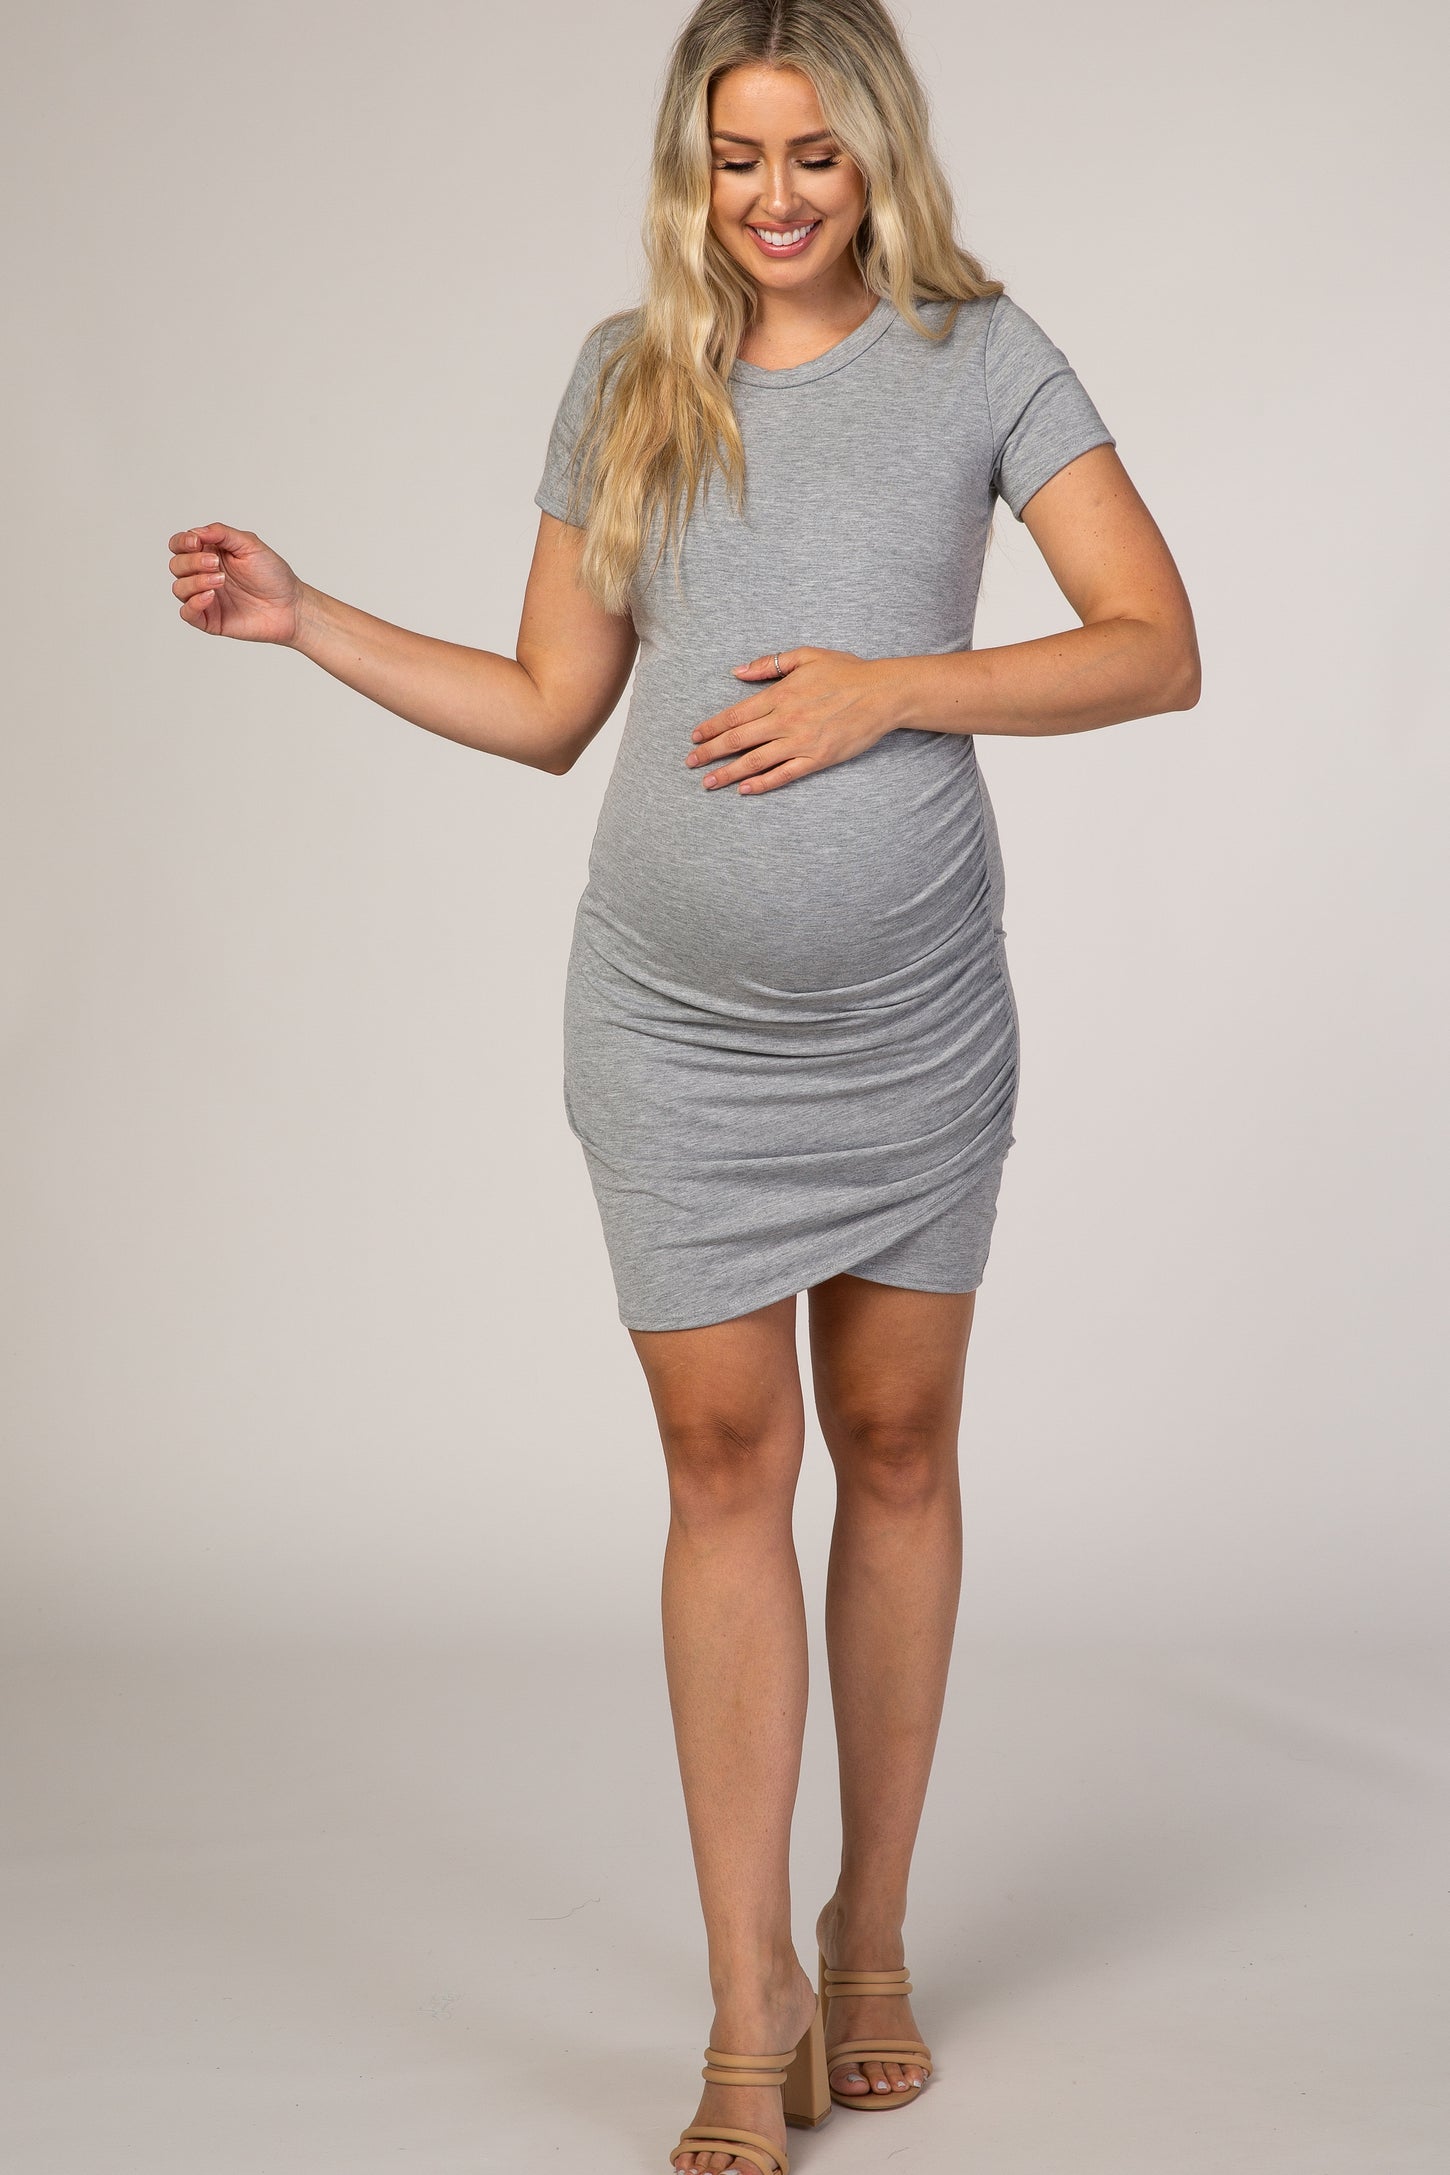 Heather Grey Wrap Maternity T-Shirt Dress